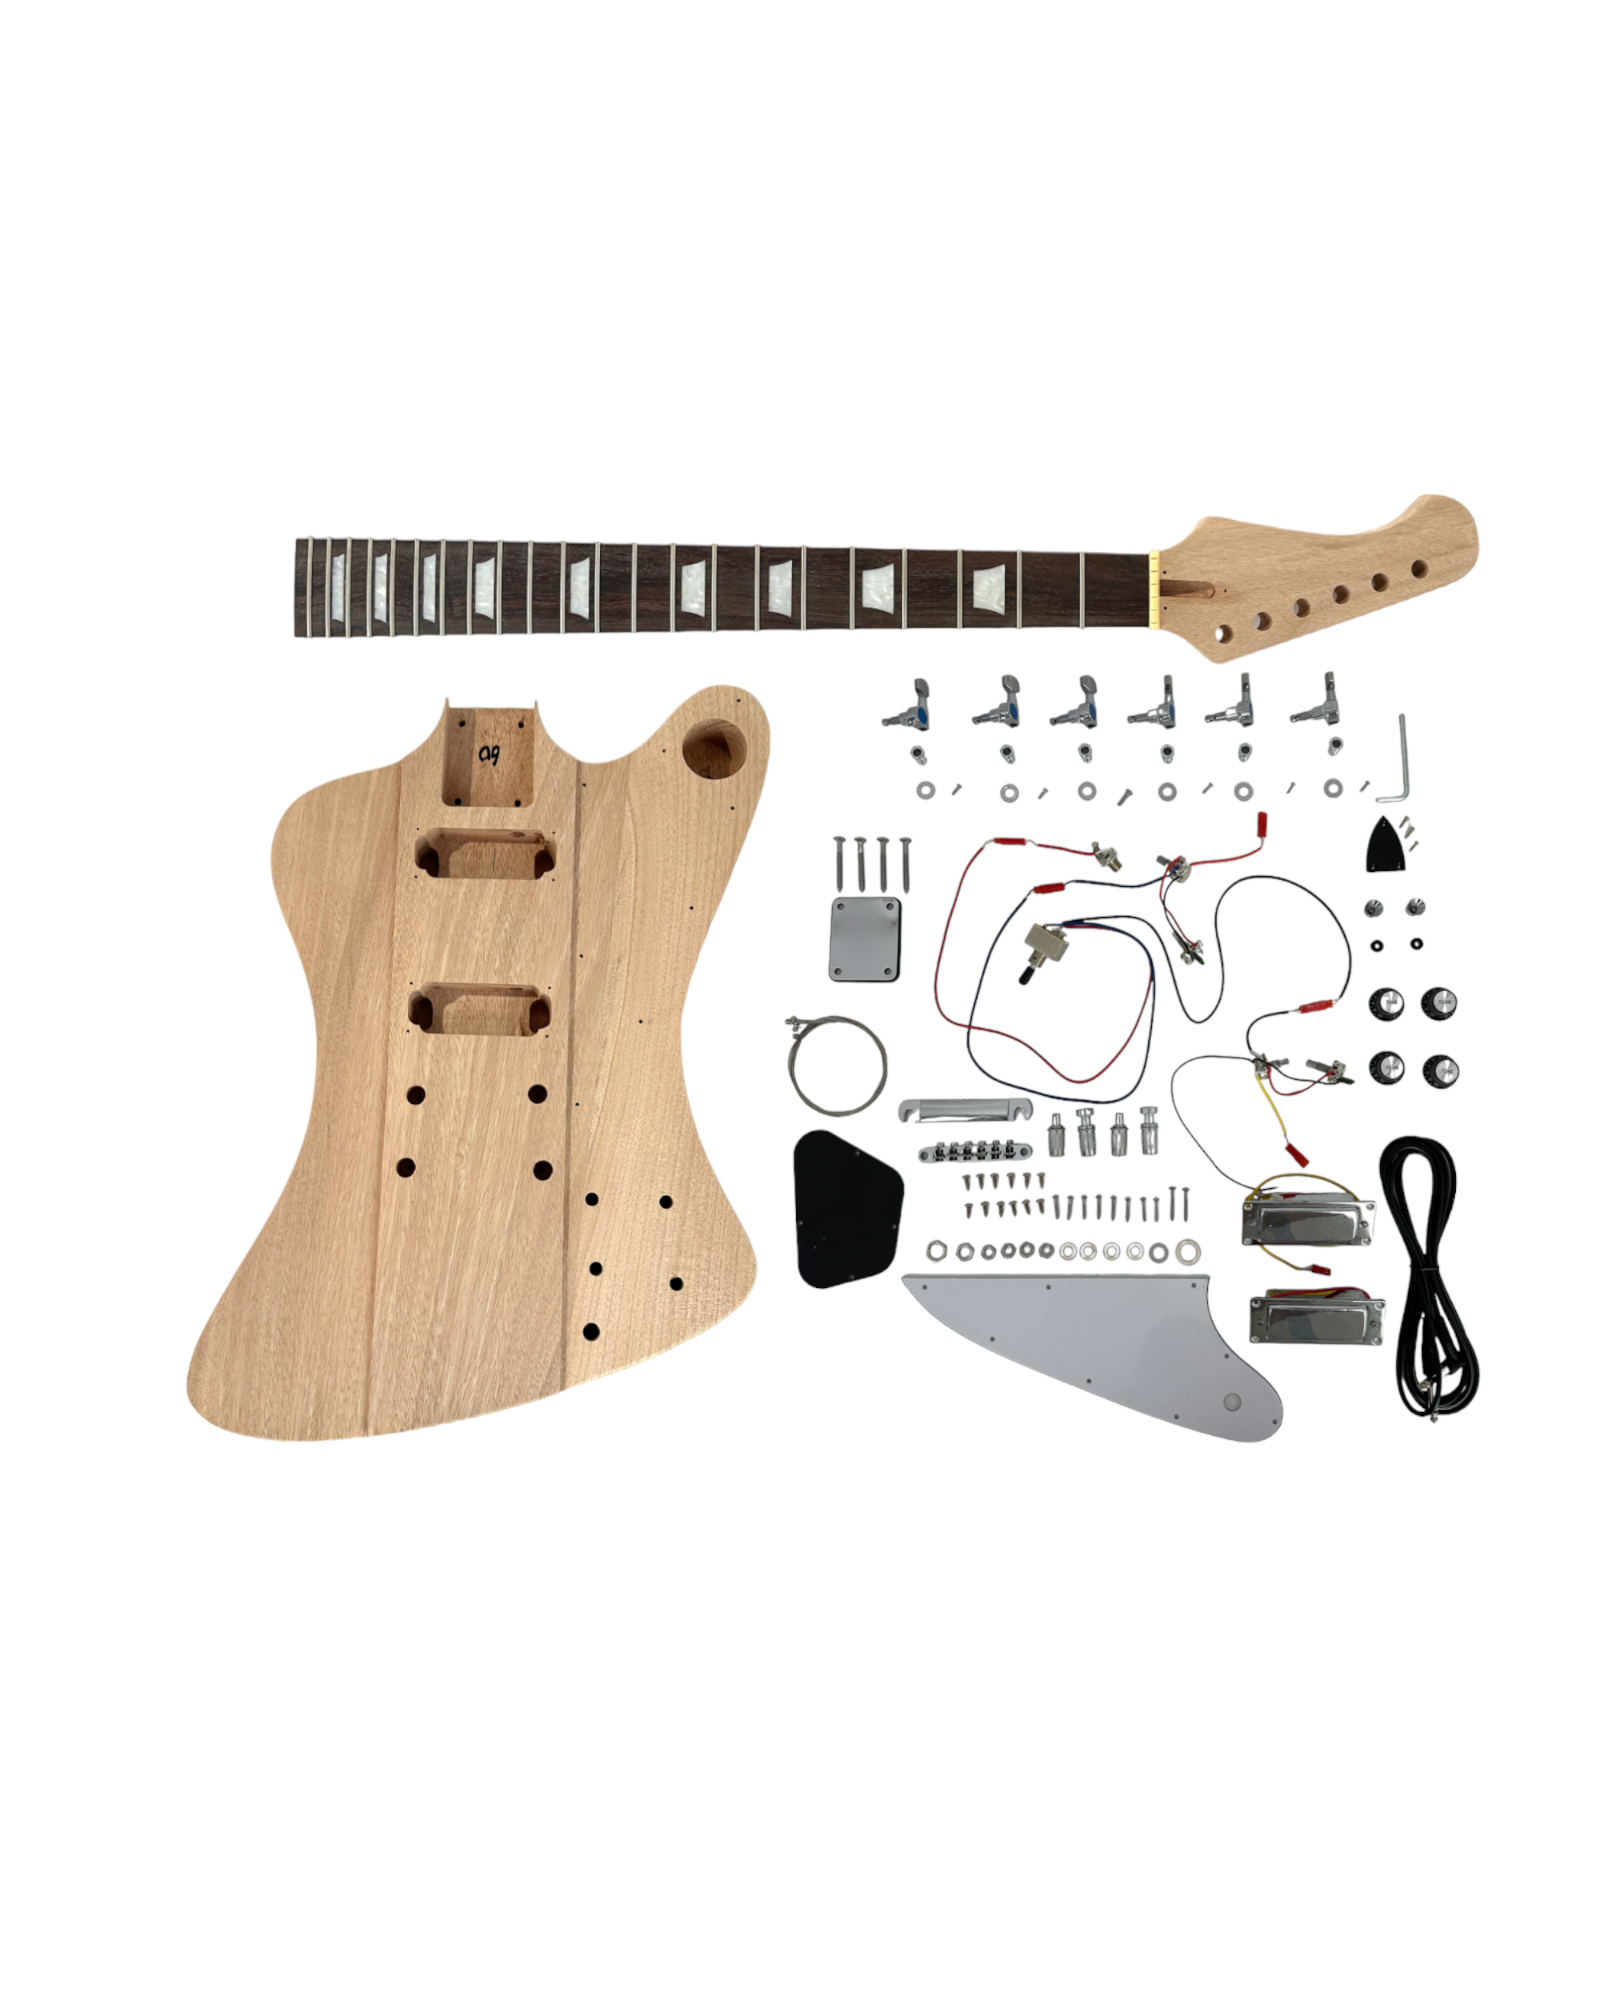 HSFB1930MDIY Solid Mahogany Body Electric Guitar DIY Kit, Tuner, 3 picks, No-Soldering, H-H